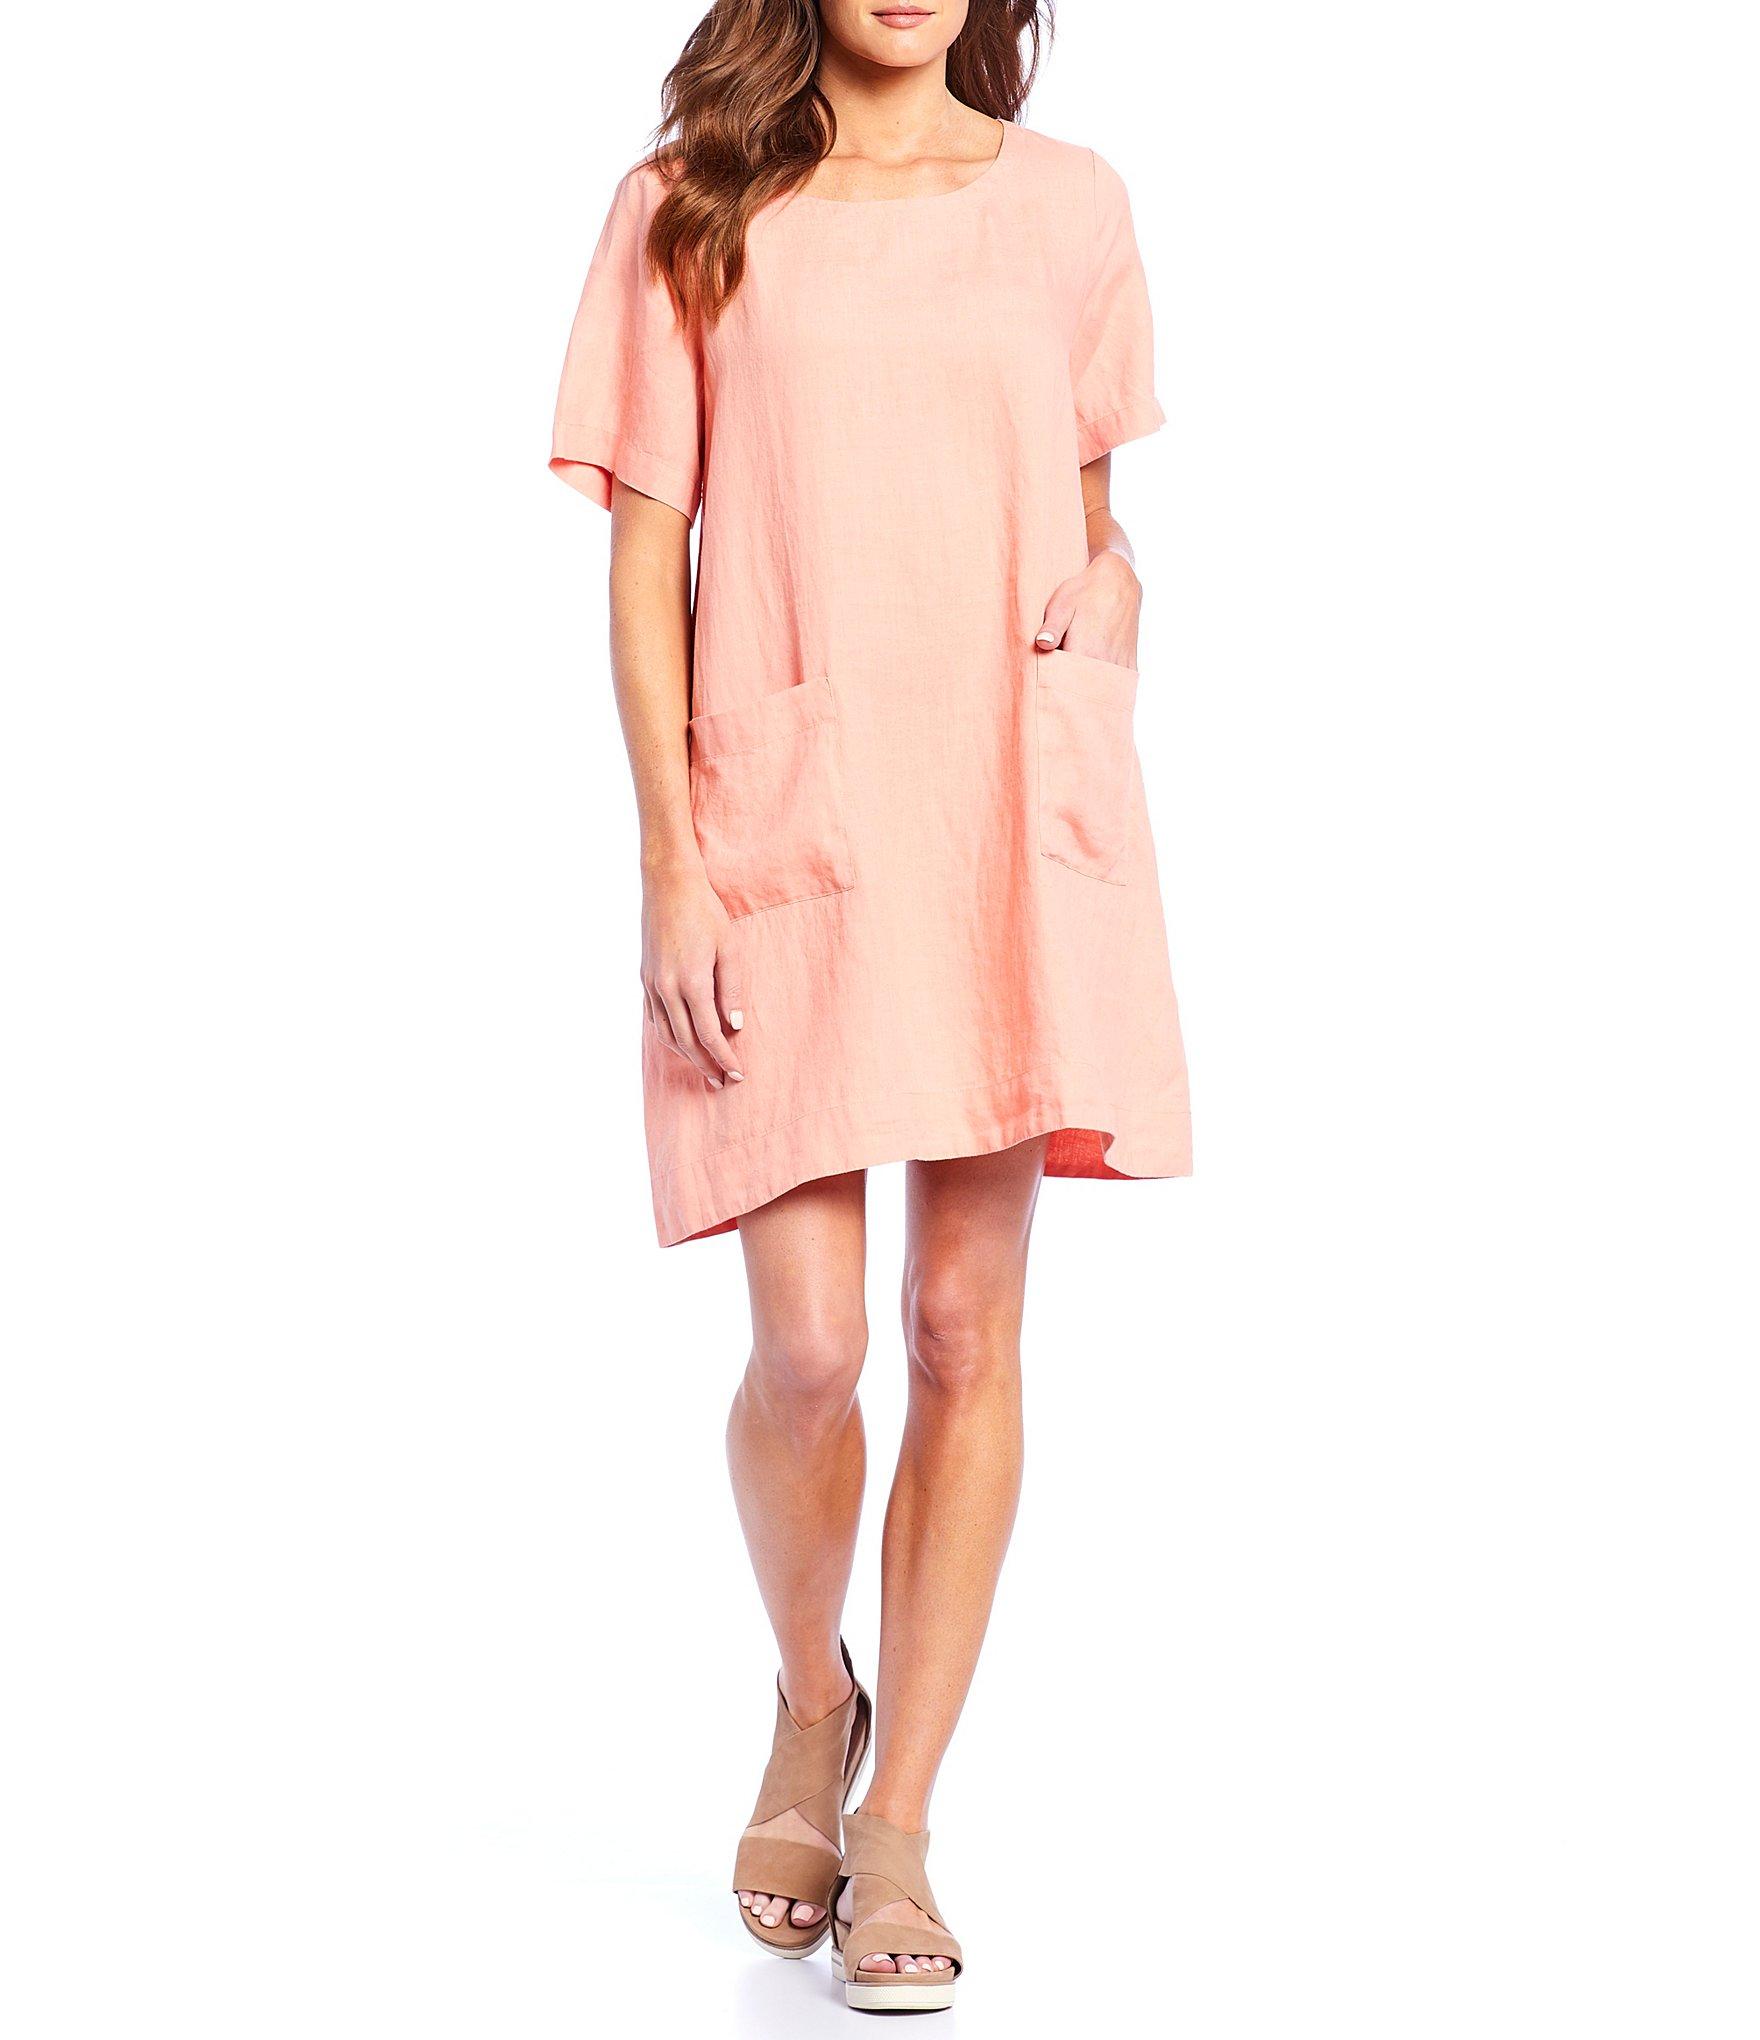 Eileen Fisher U-neck Front Pockets Linen Dress in Pink - Lyst